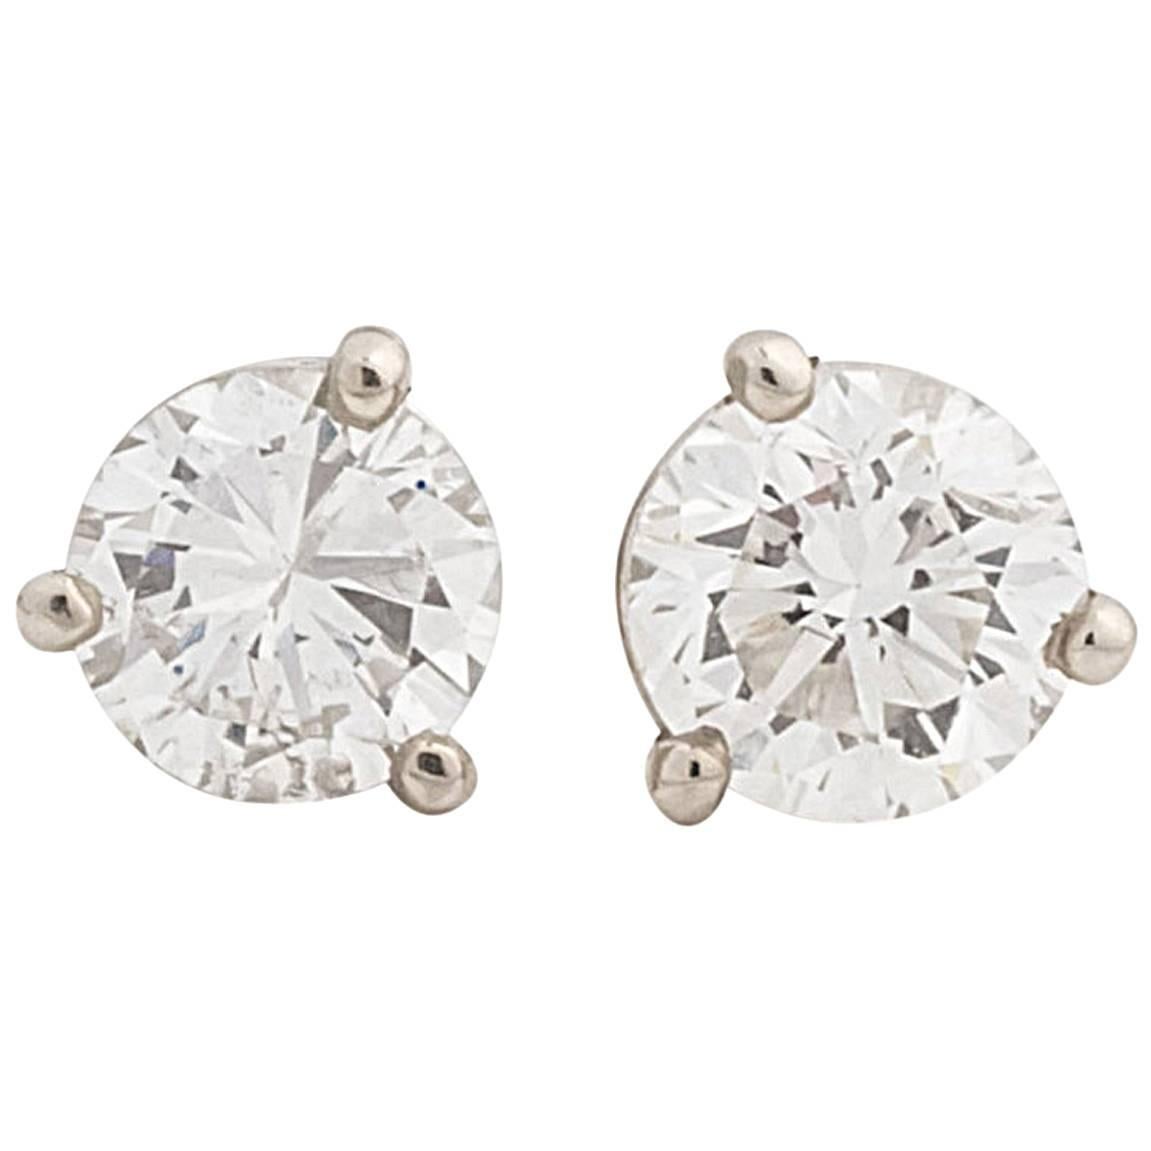 Martini Style Three-Prong Diamond Earring Studs